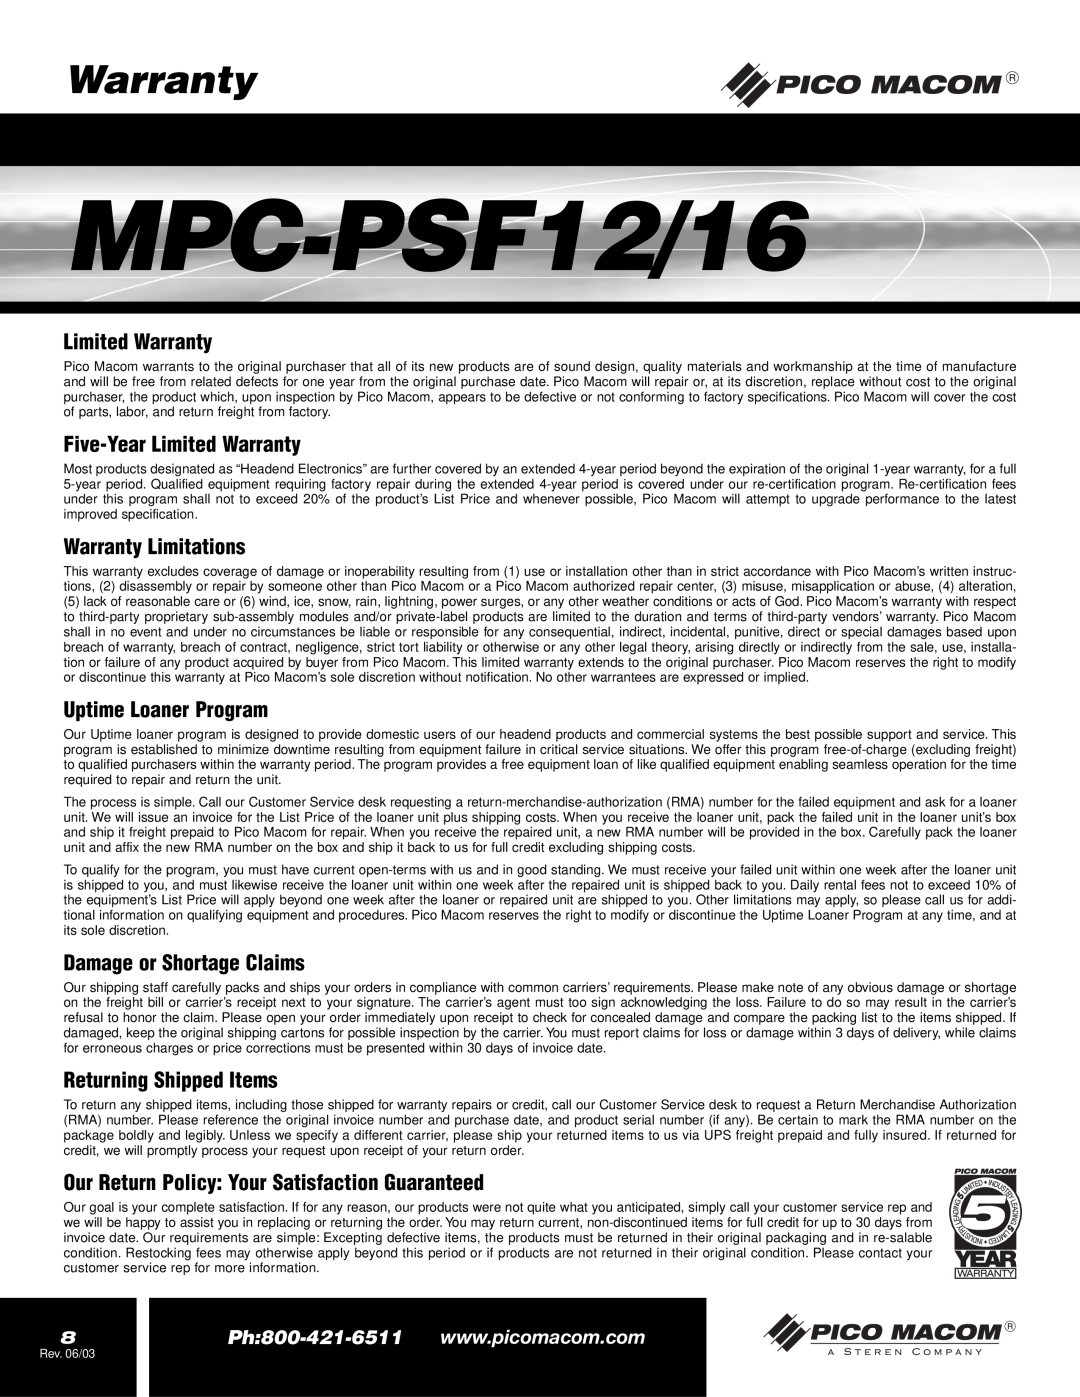 Pico Macom MPC-PSF16 Five-Year Limited Warranty, Warranty Limitations, Uptime Loaner Program, MPC-PSF12/16 